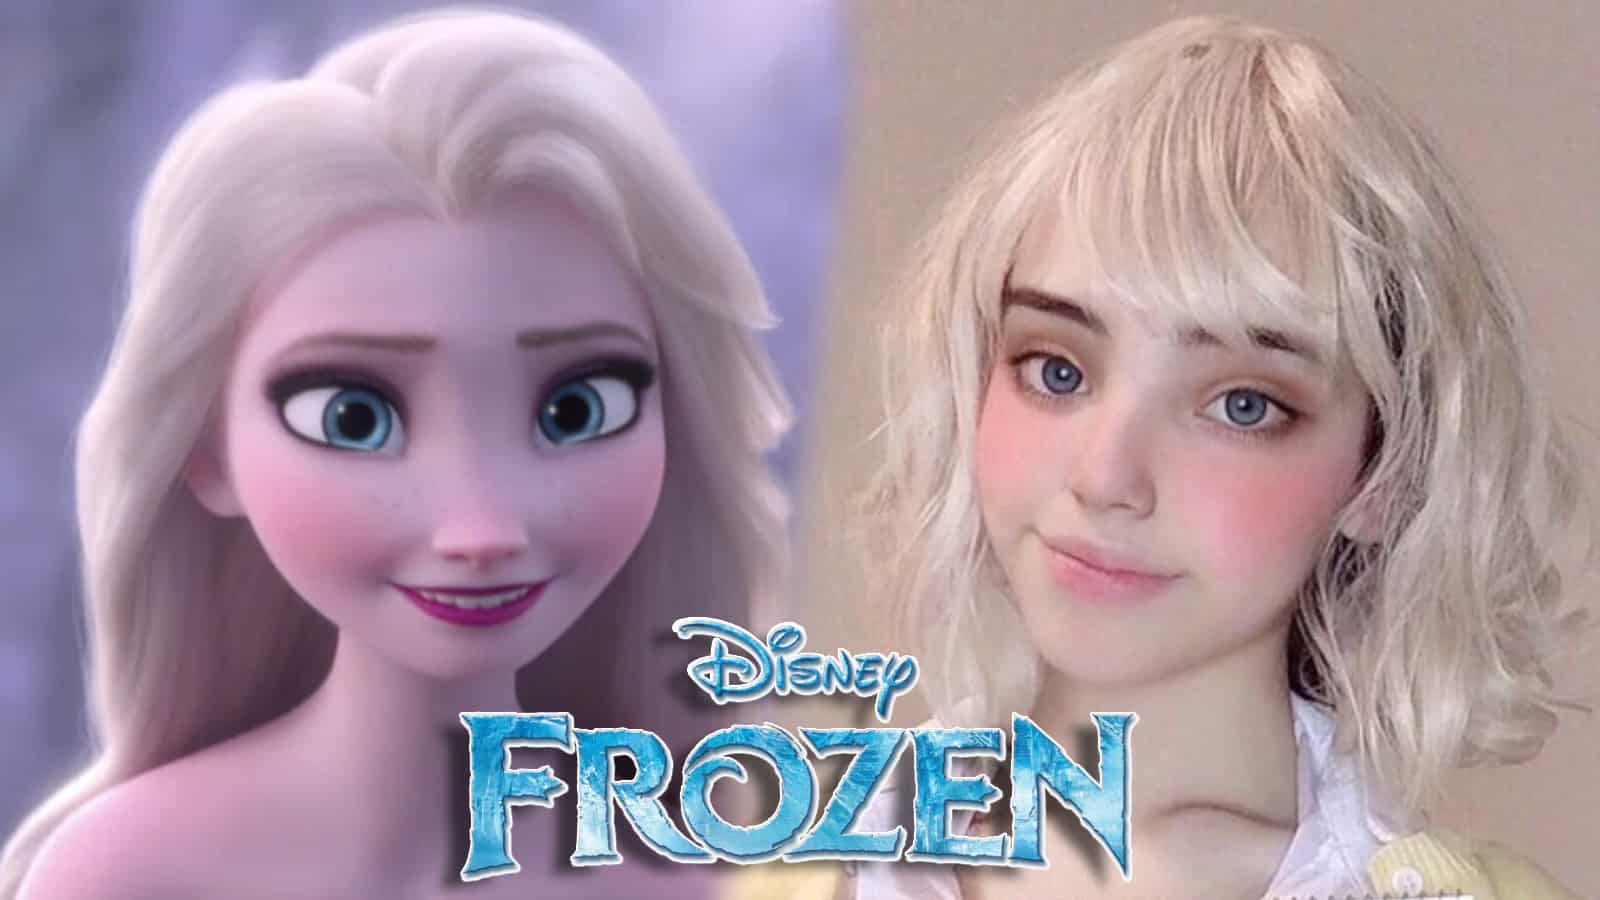 Disney Princess Elsa from Frozen next to cosplayer